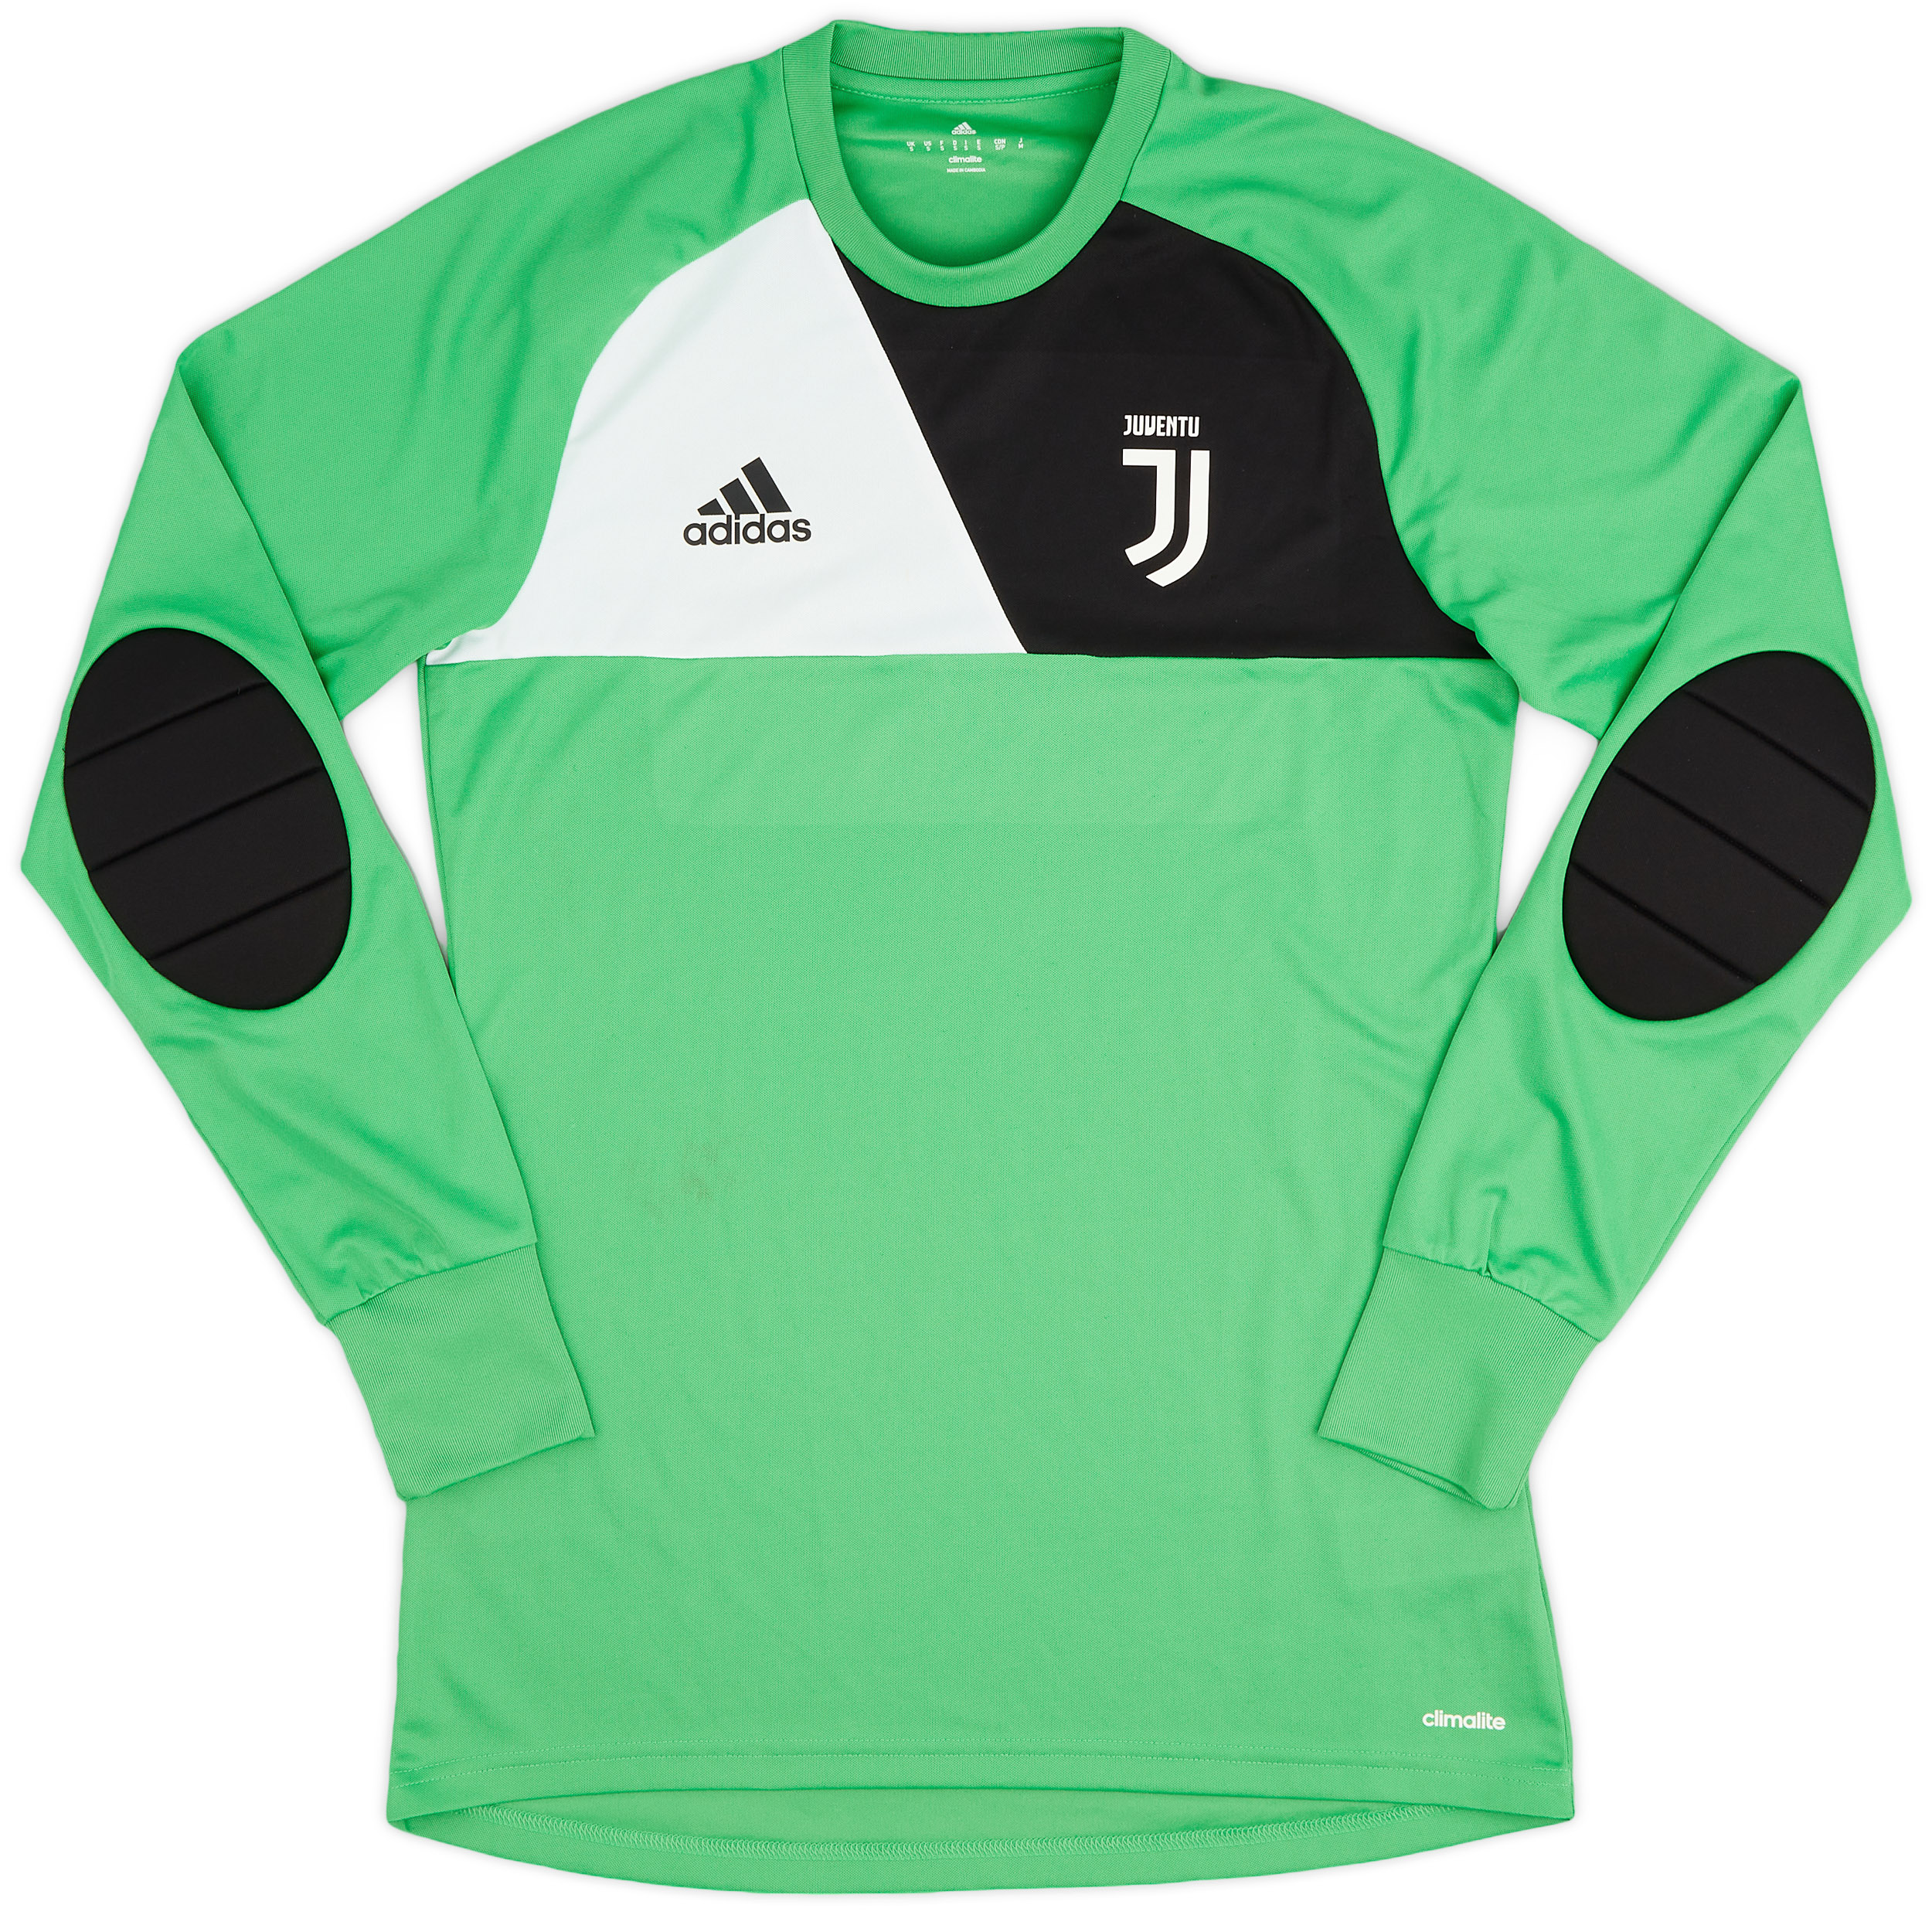 2017-18 adidas Template GK Shirt (Juventus) - 6/10 - ()